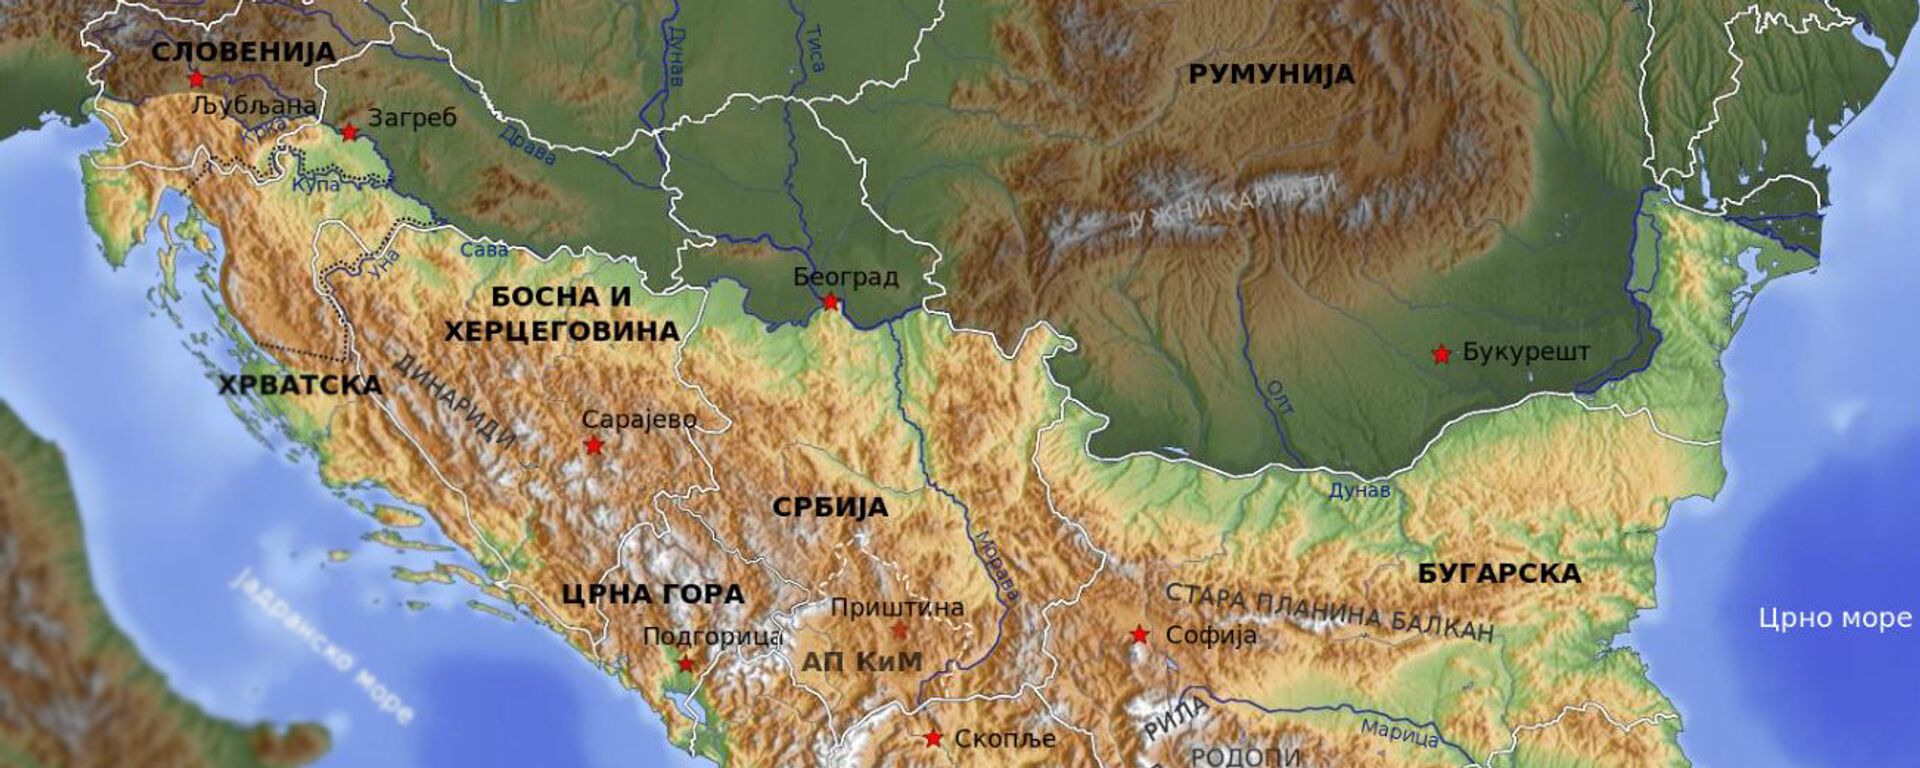 Мапа Балкана - Sputnik Србија, 1920, 11.05.2018